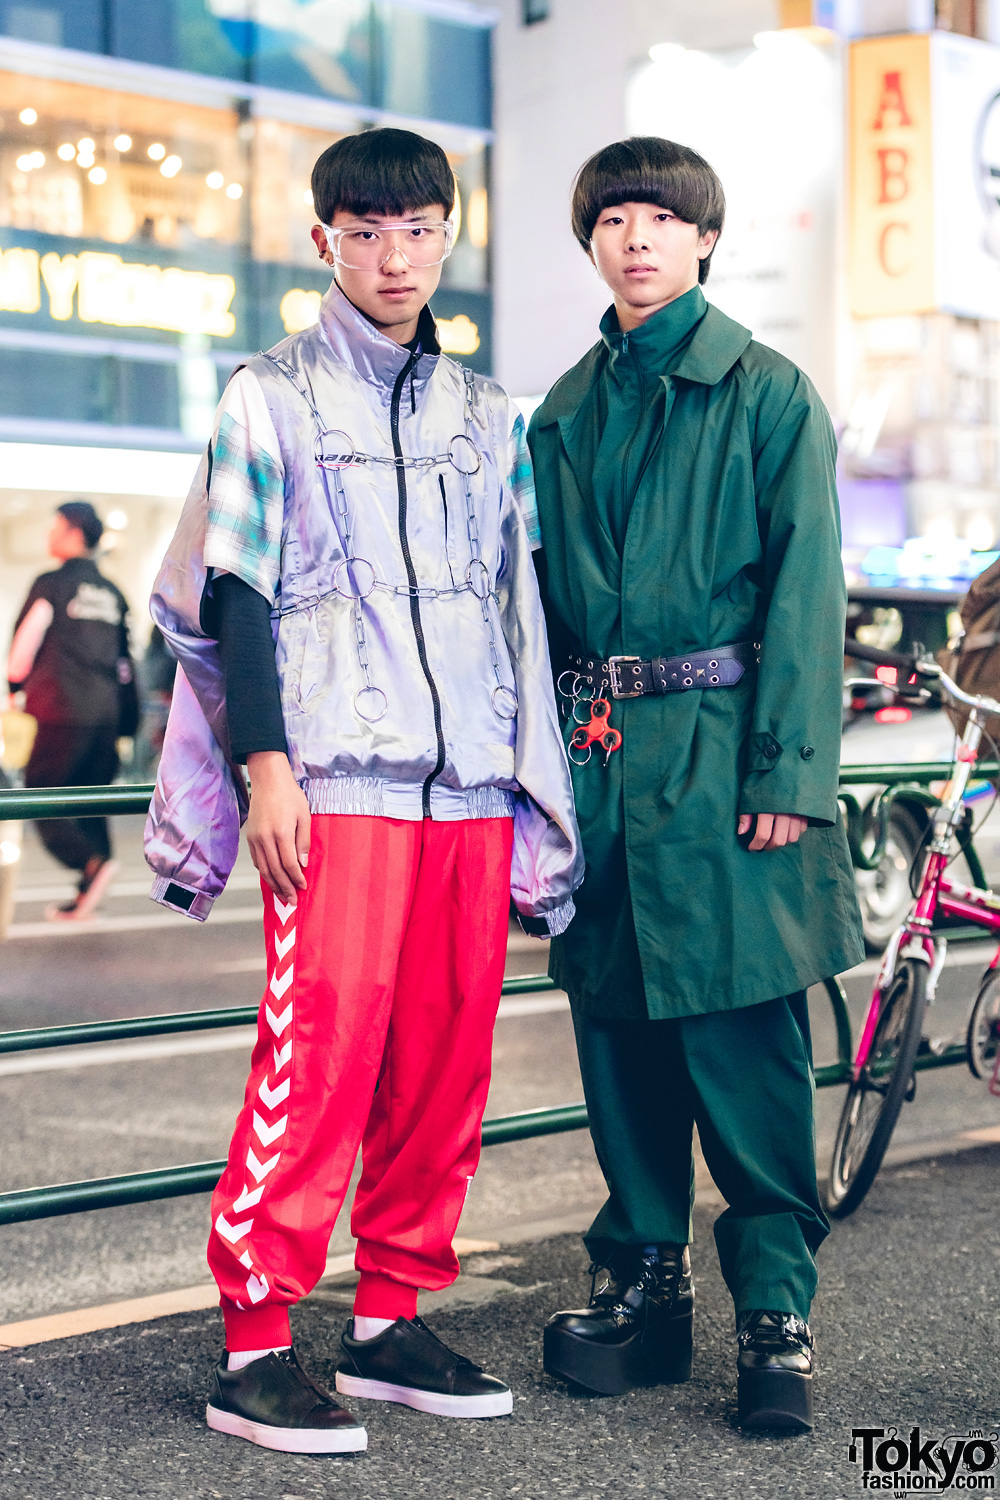 Harajuku Menswear Street Fashion w/ Mizuno Jacket, Hitsuji Plaid Shirt, Red Track Pants & All-Green Outfit